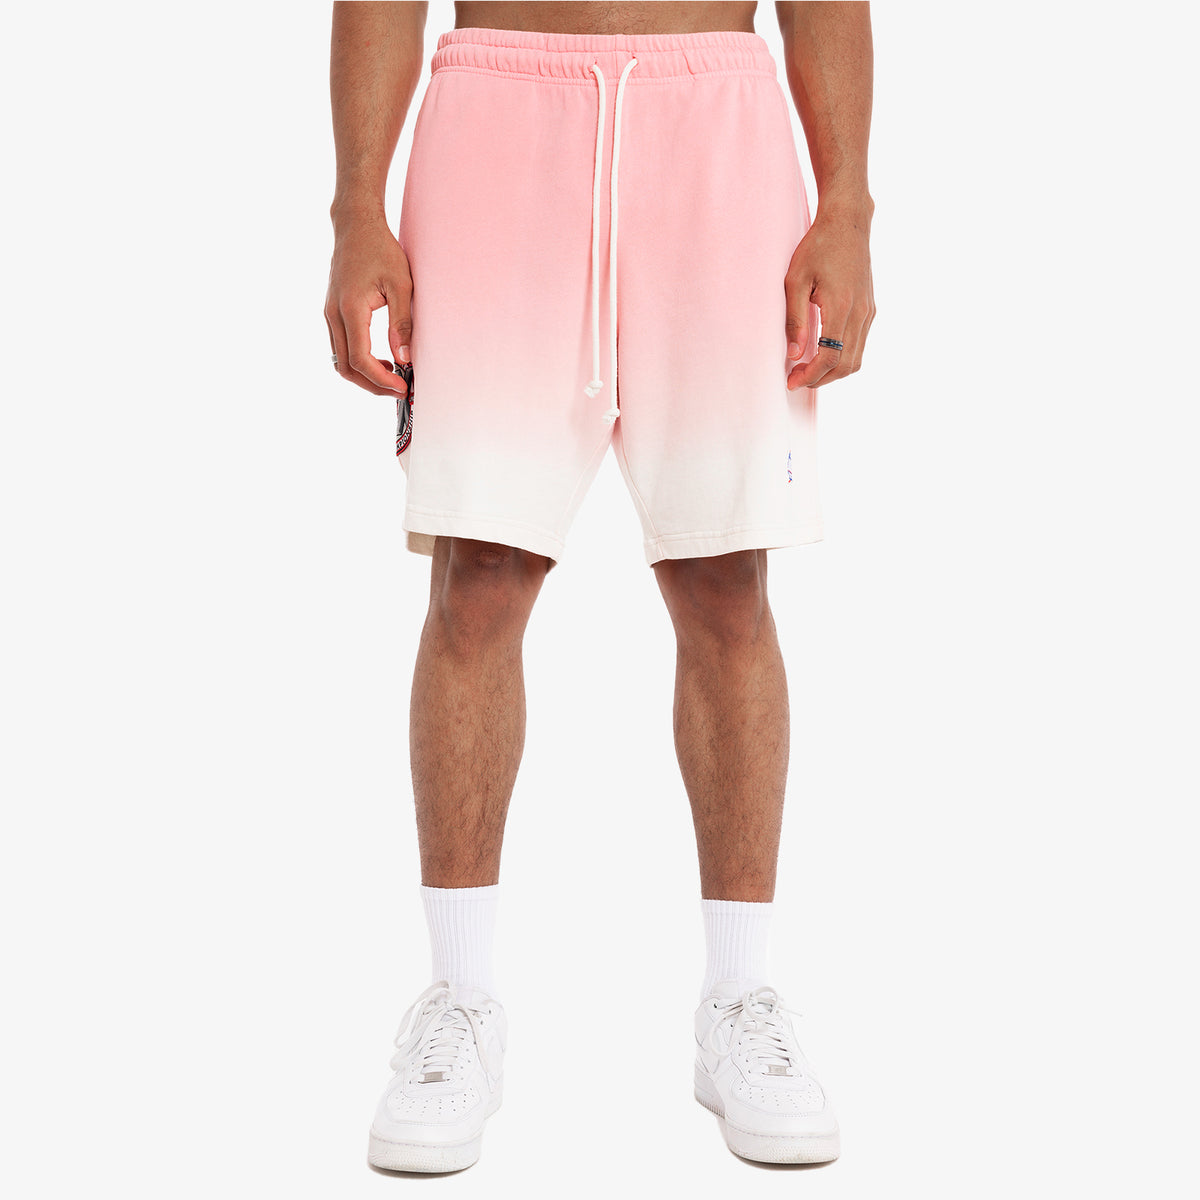 Chicago Bulls Run It Shorts - Pink/Worn White